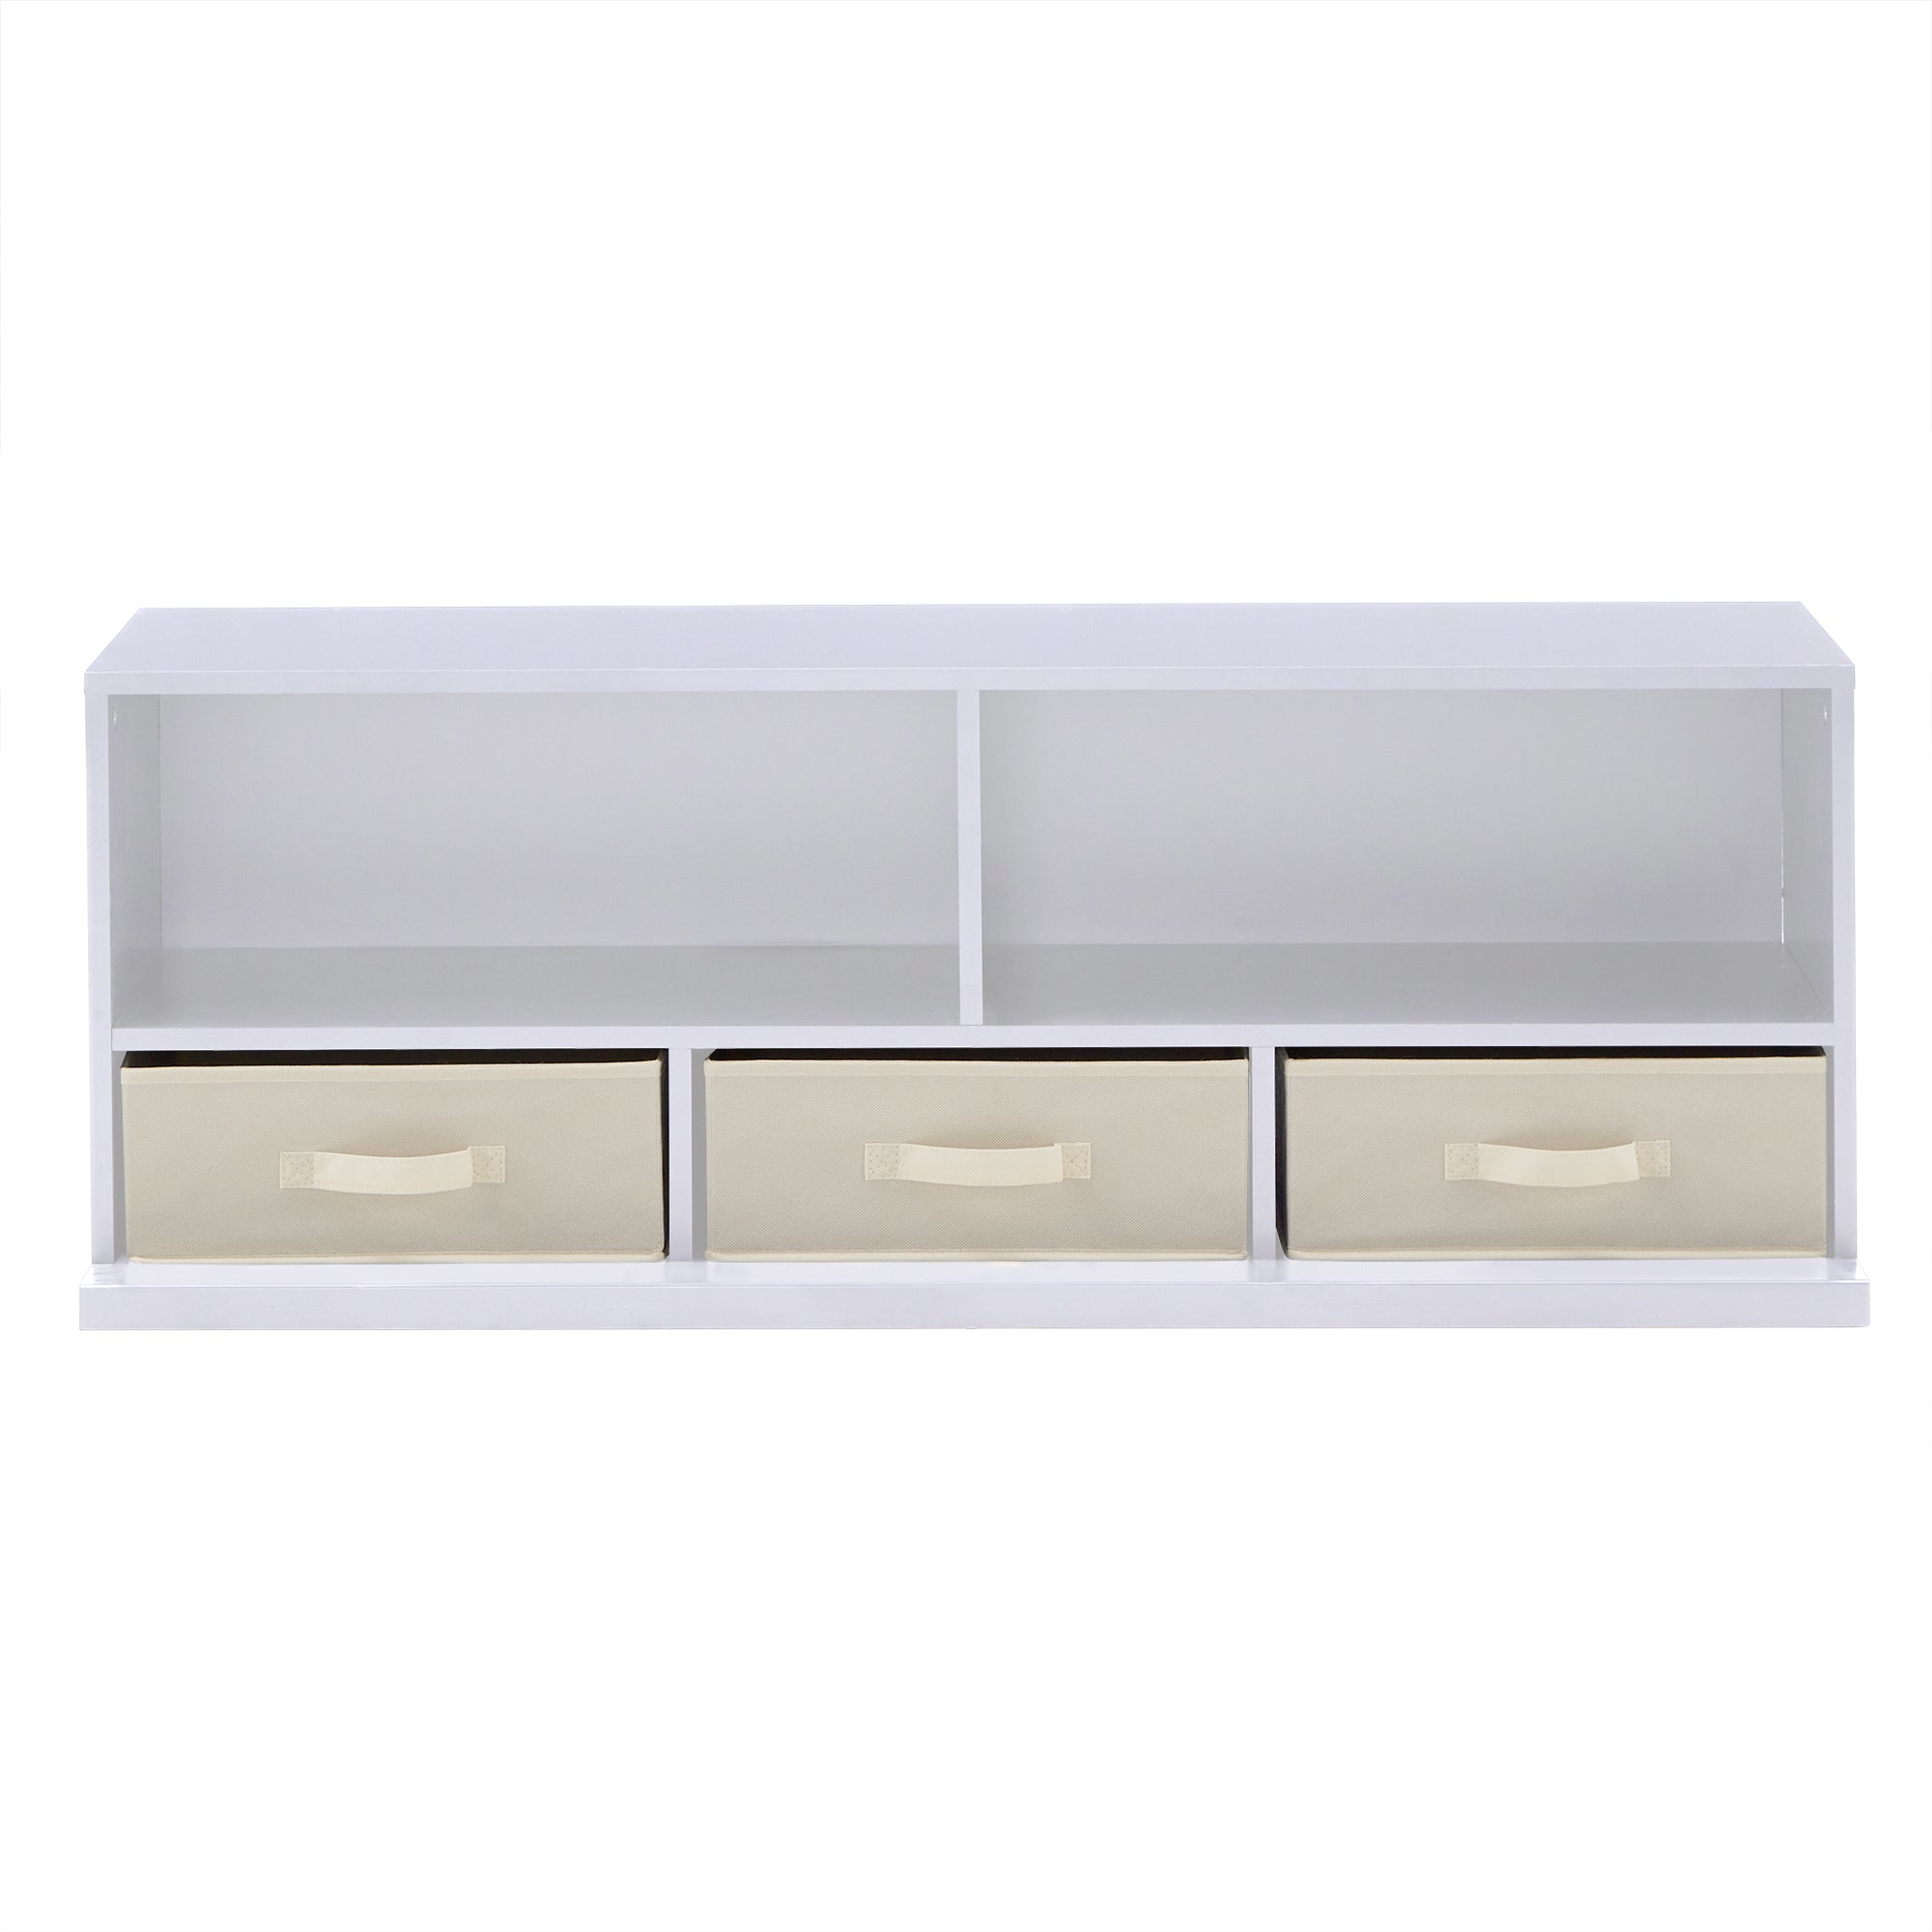 Modular Stacking Storage Bins - White, 1 Box with three (3) Drawers